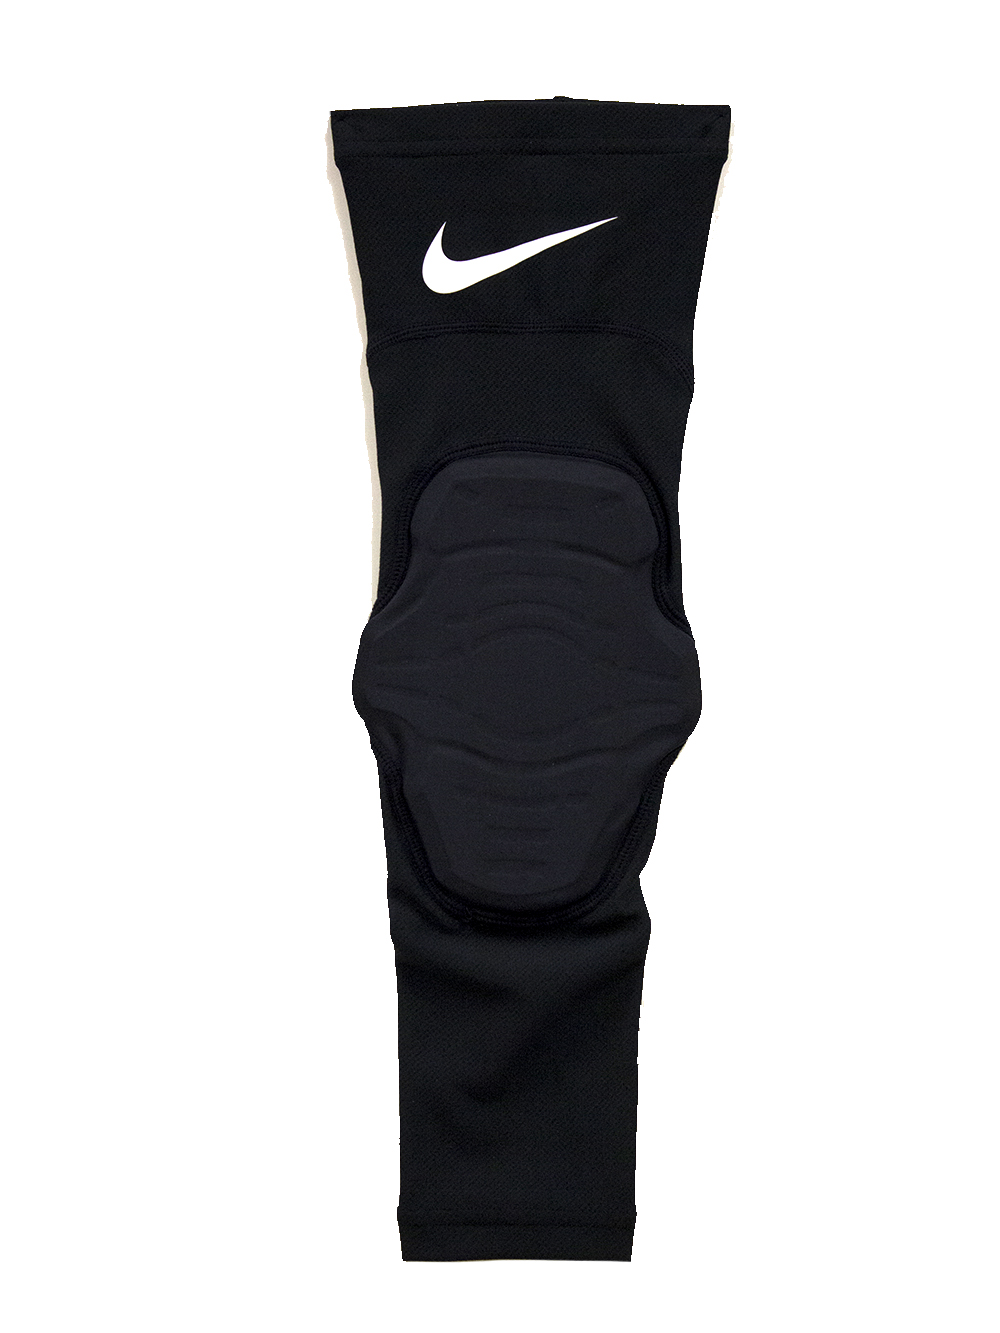 Nike Padded Arm Sleeve Basketball